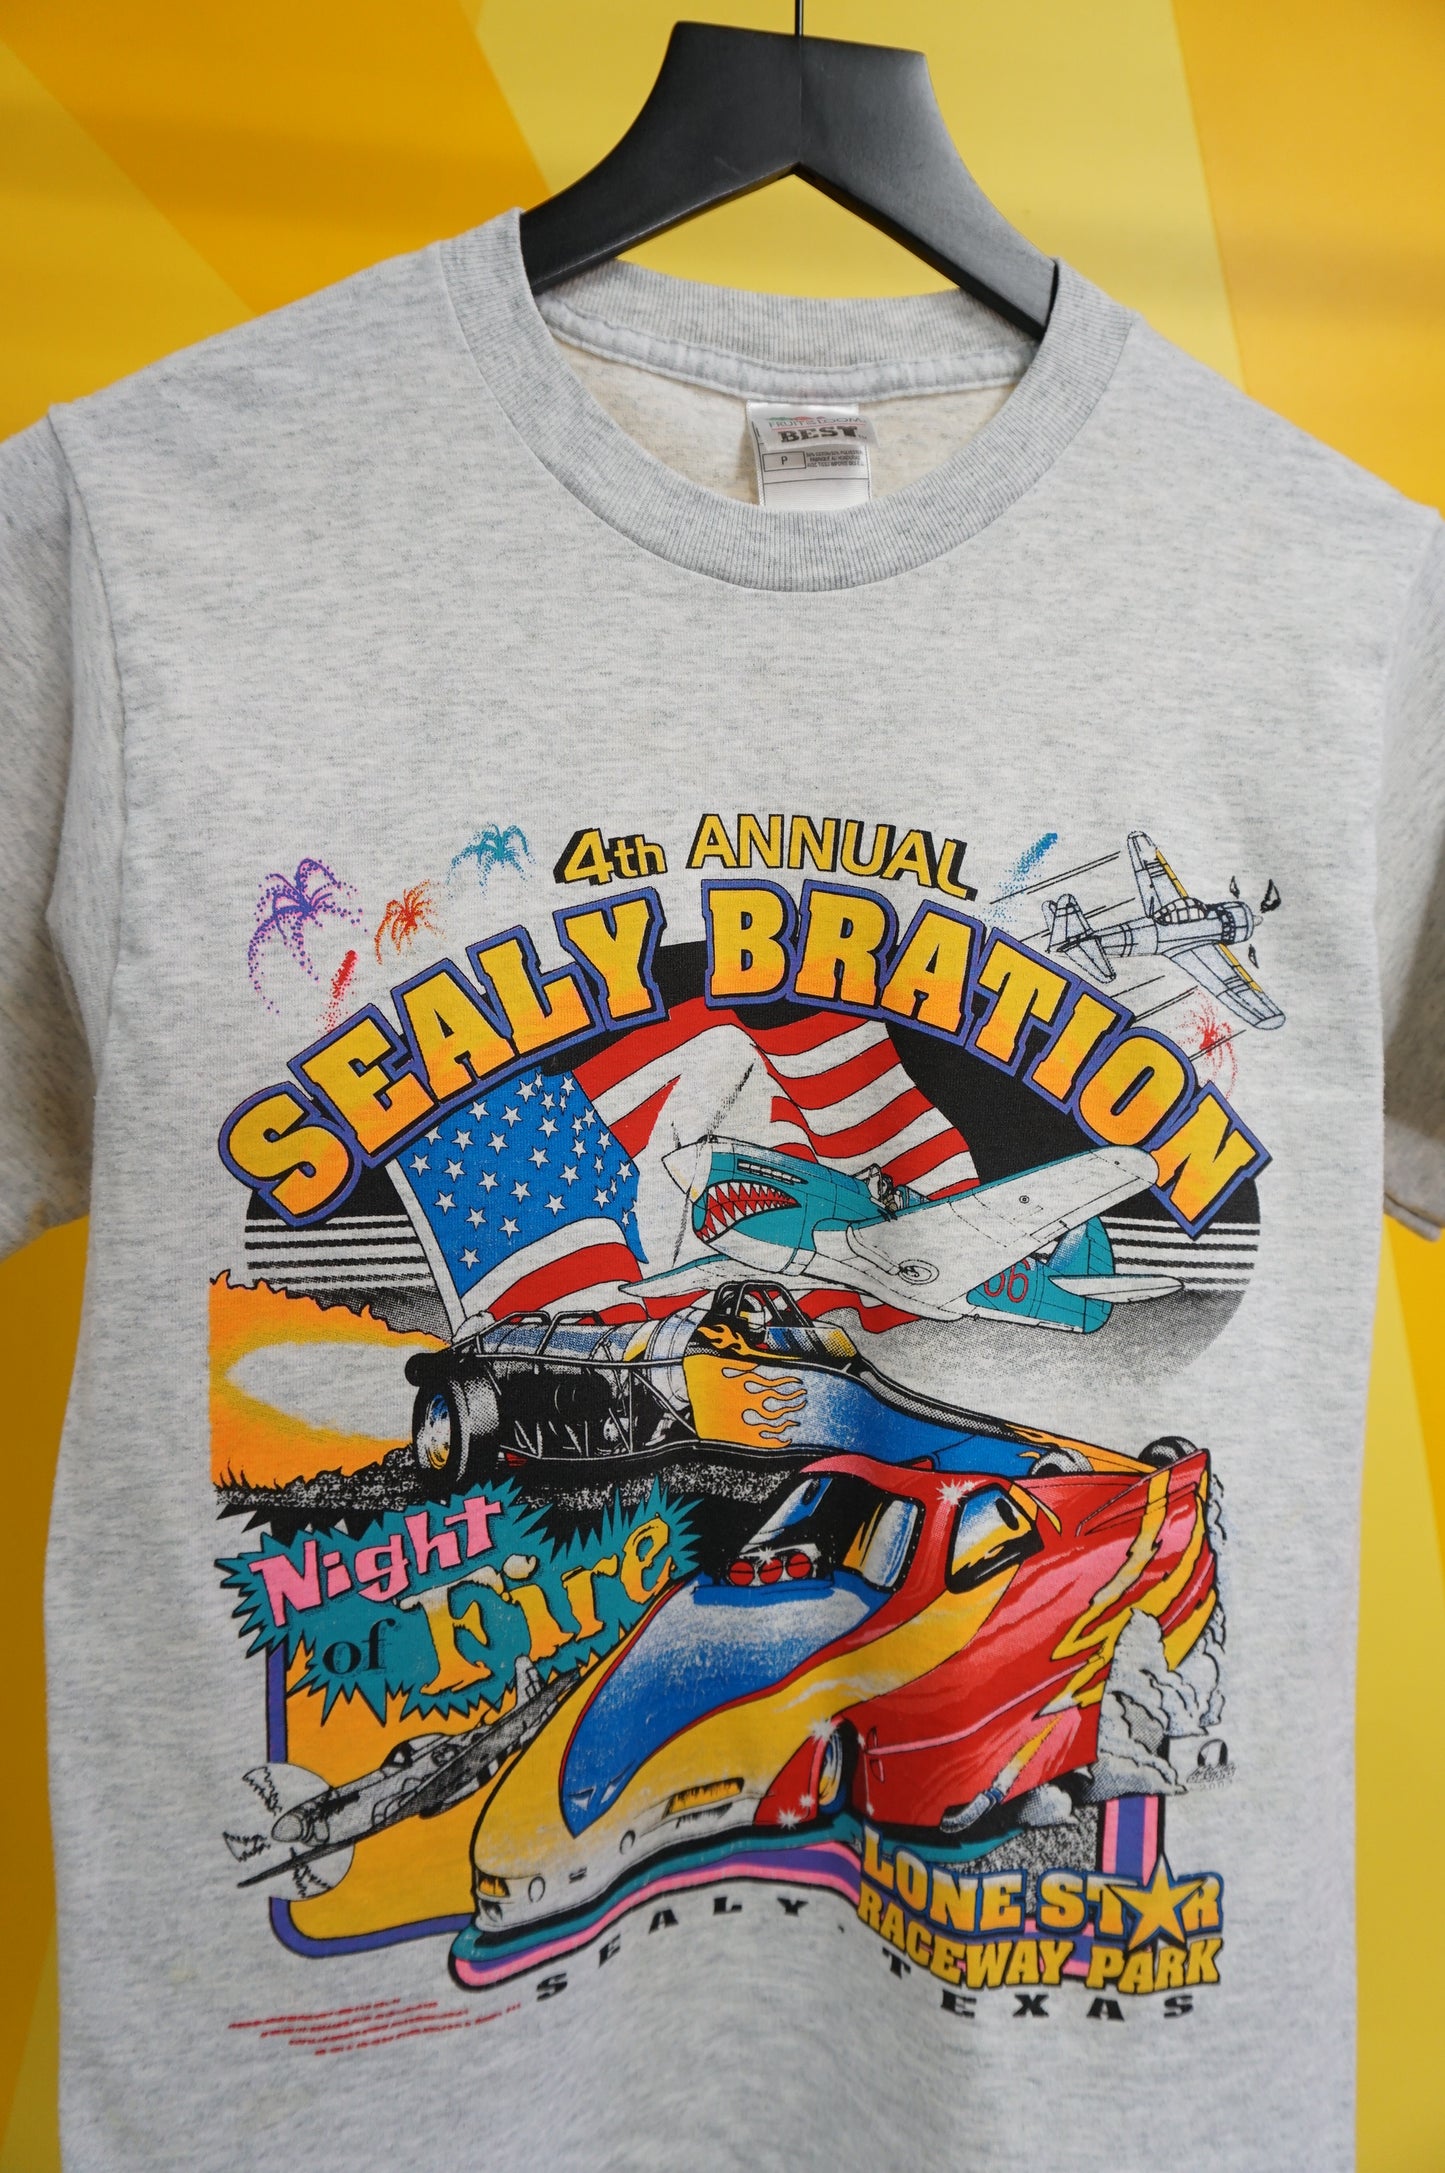 (XS/S) 2003 Lonestar Raceway Park 4rh Annual Sealy-Bration T-Shirt